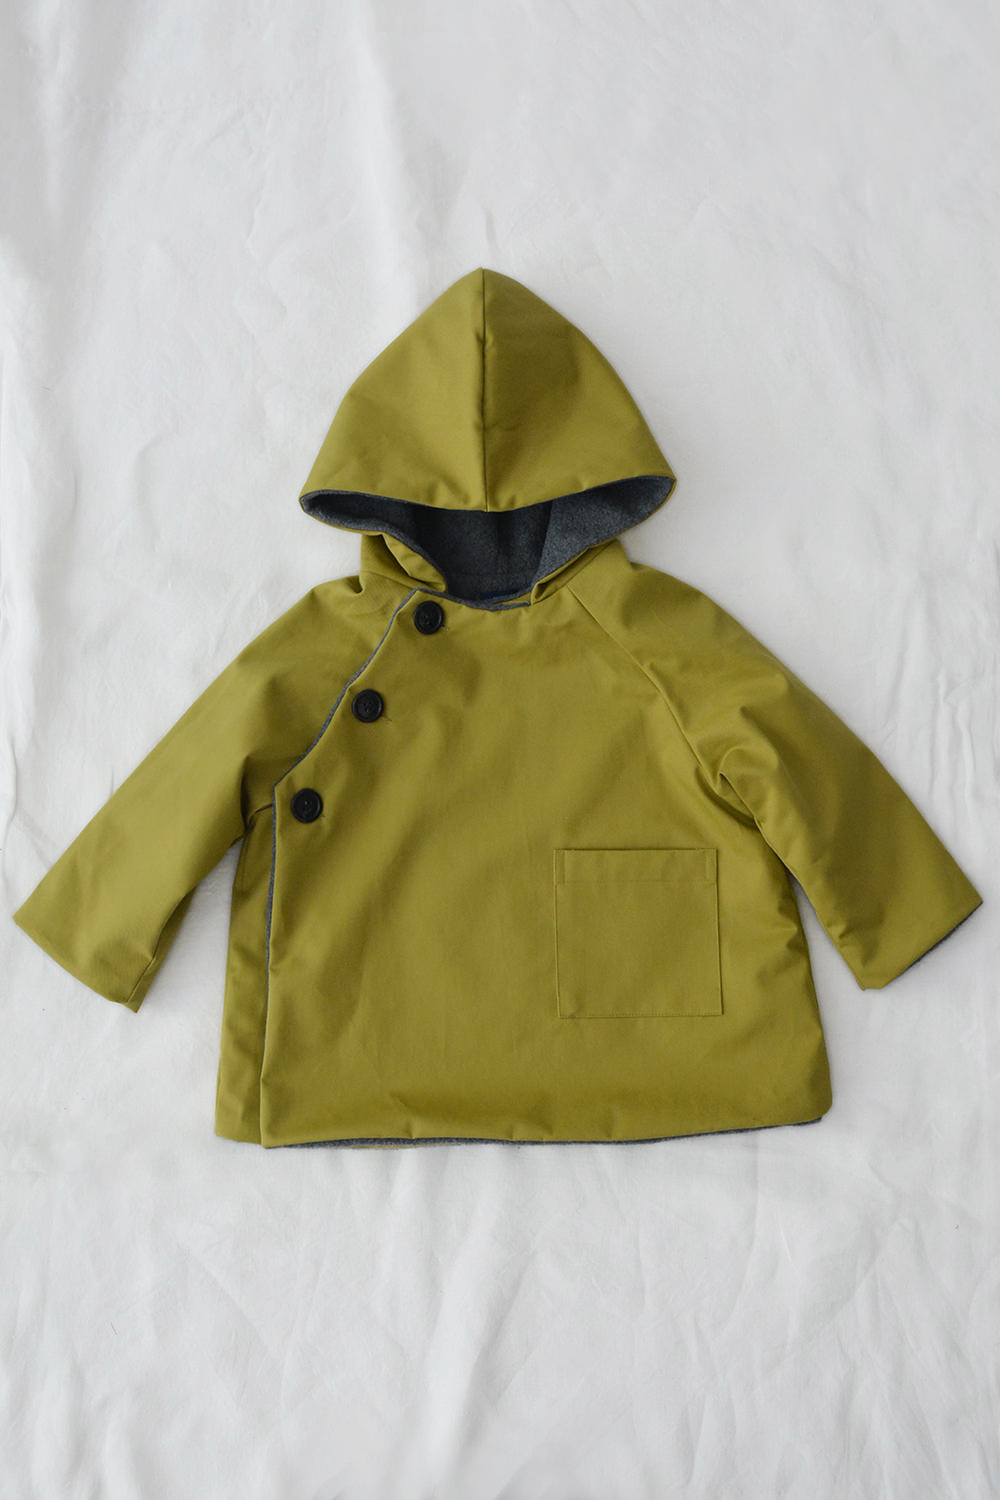 Gasa Jacket Olive - Light Weight Hoodie Jacket for Kids - Makie. Top.